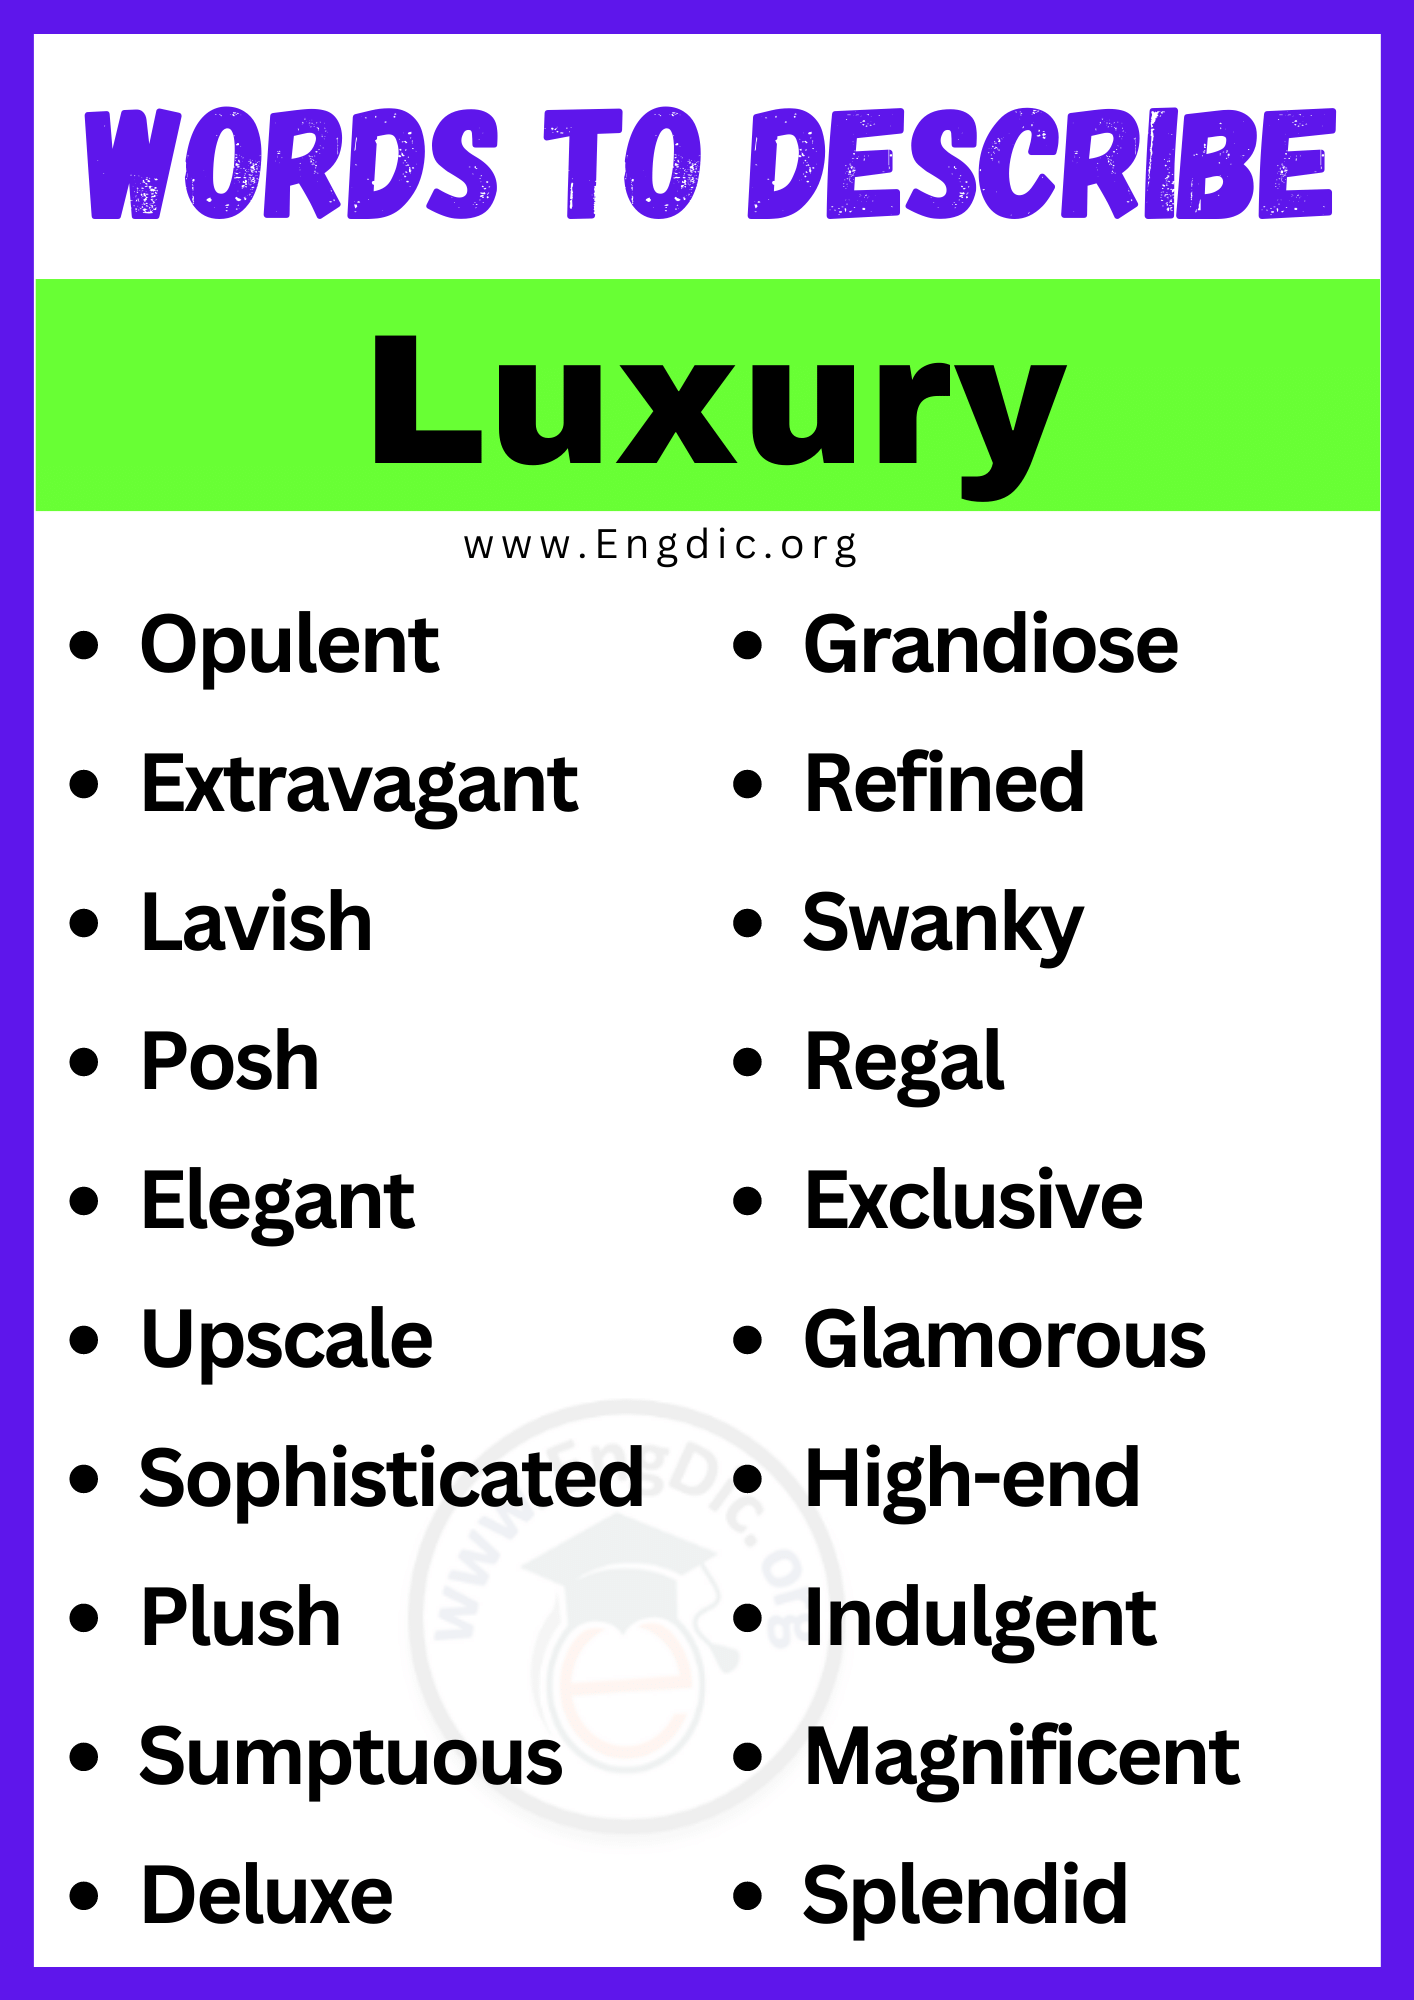 Words to Describe Luxury